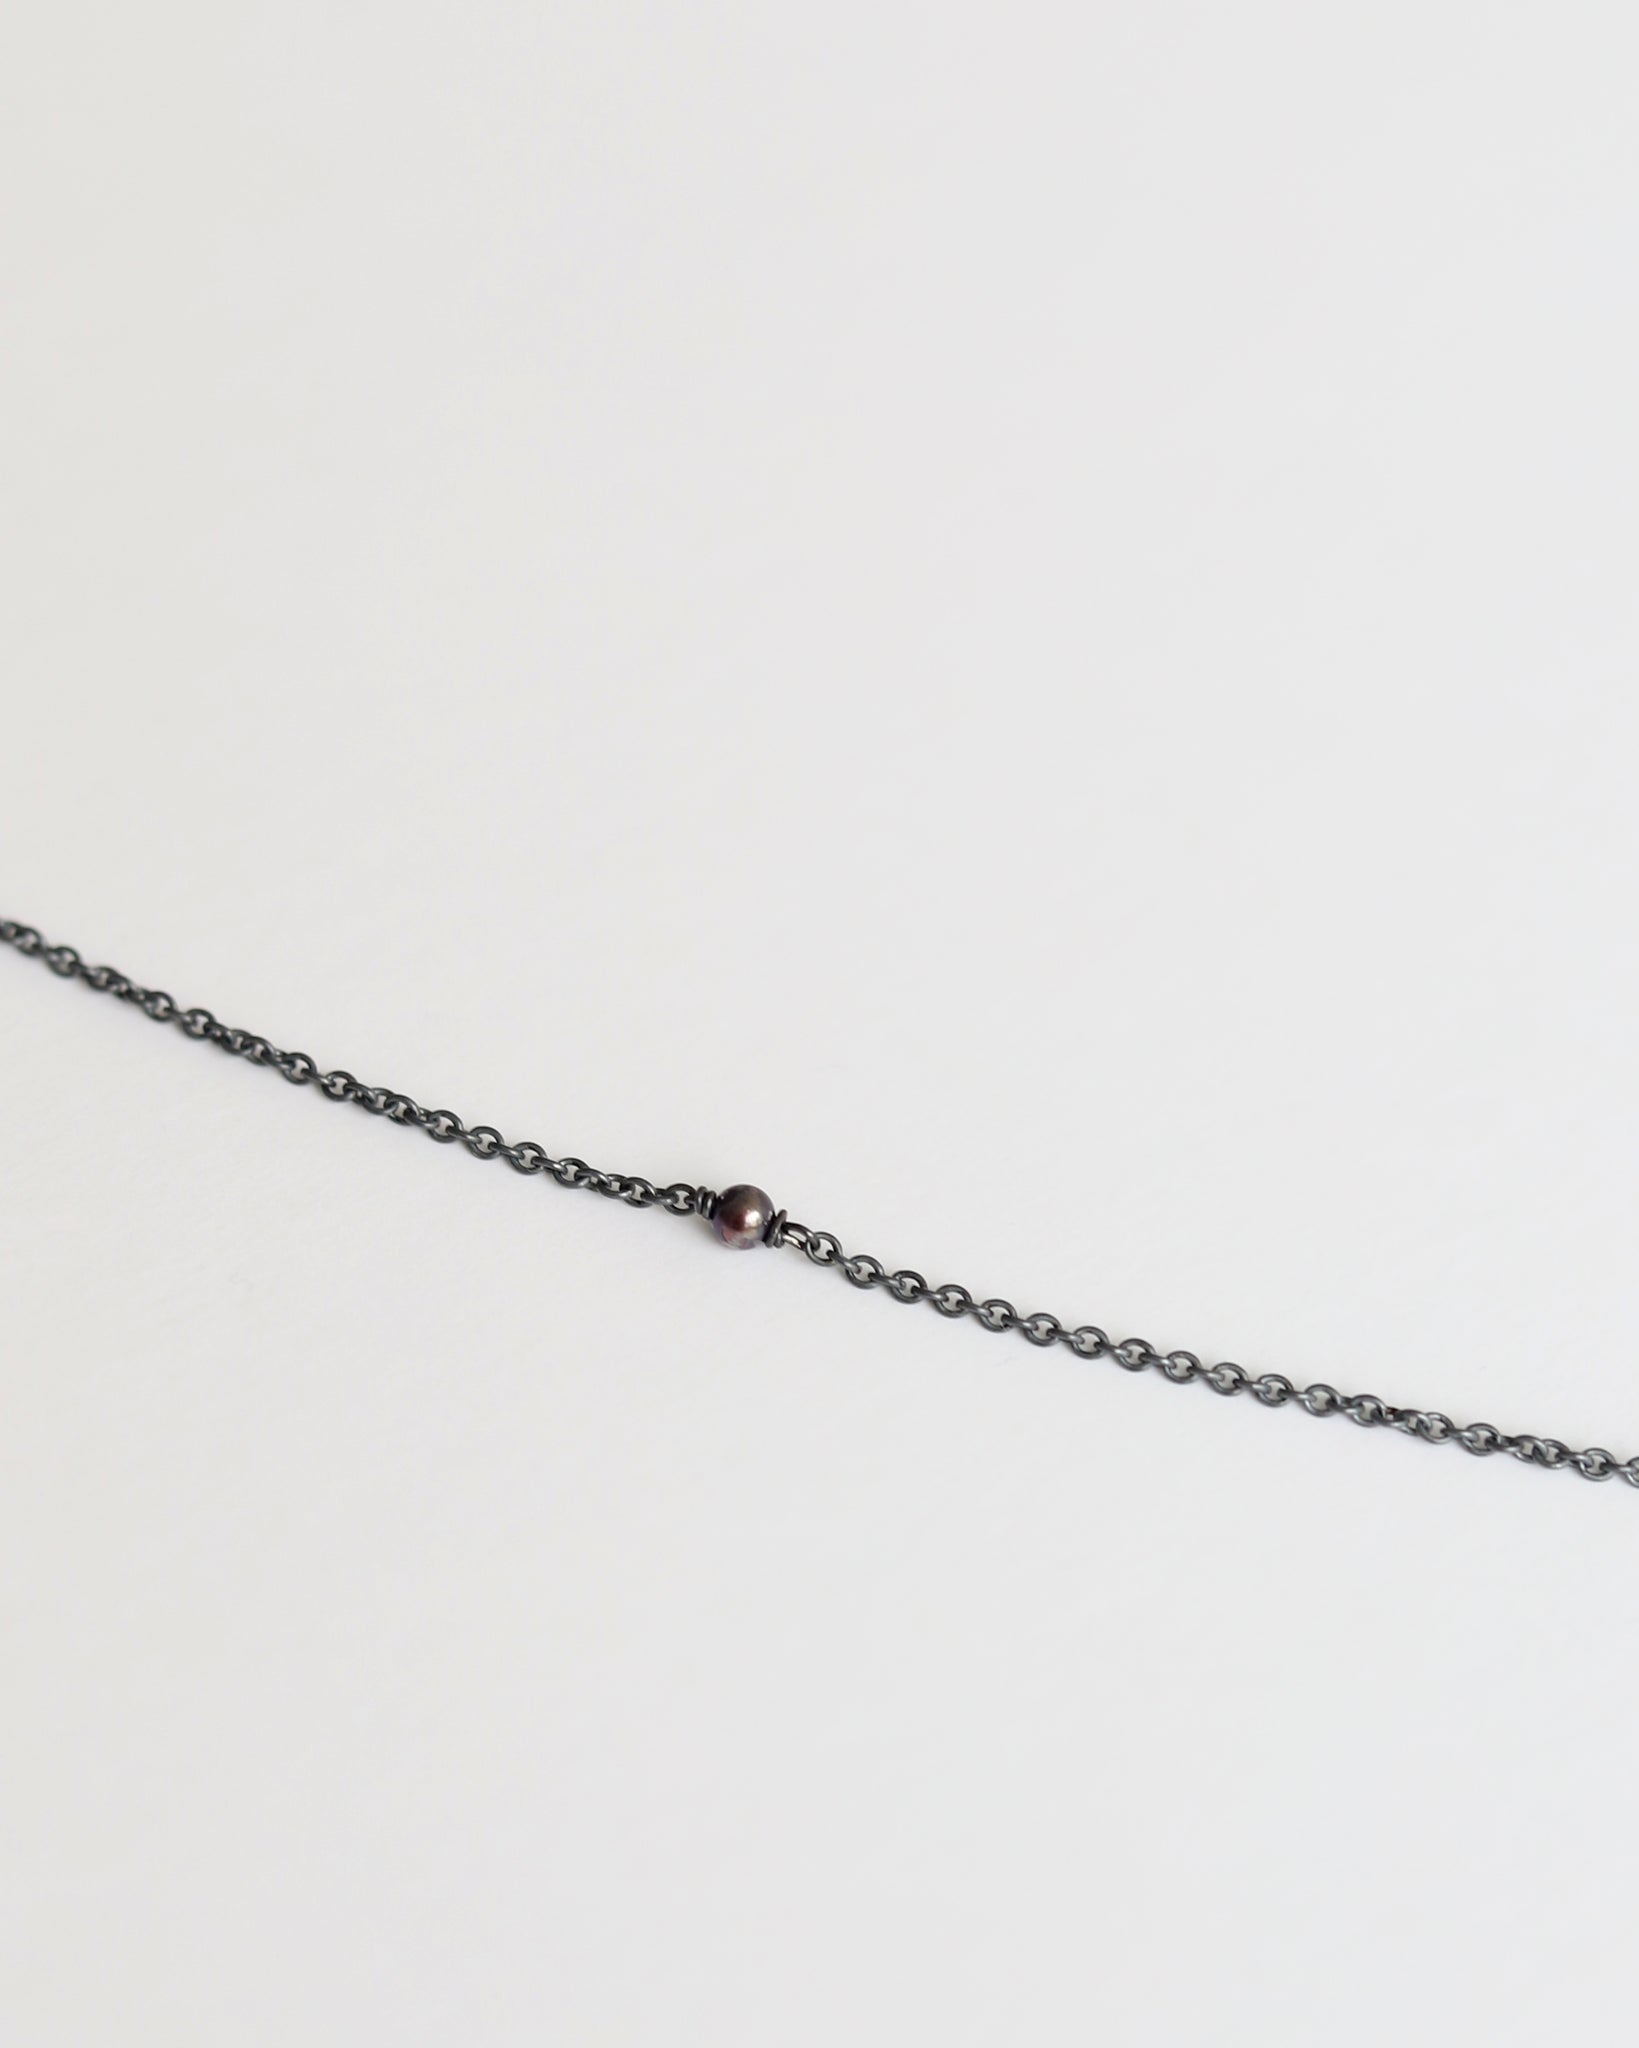 Bracelet in 925 Oxidised Silver & Black Akoya Pearl - 1701BPB